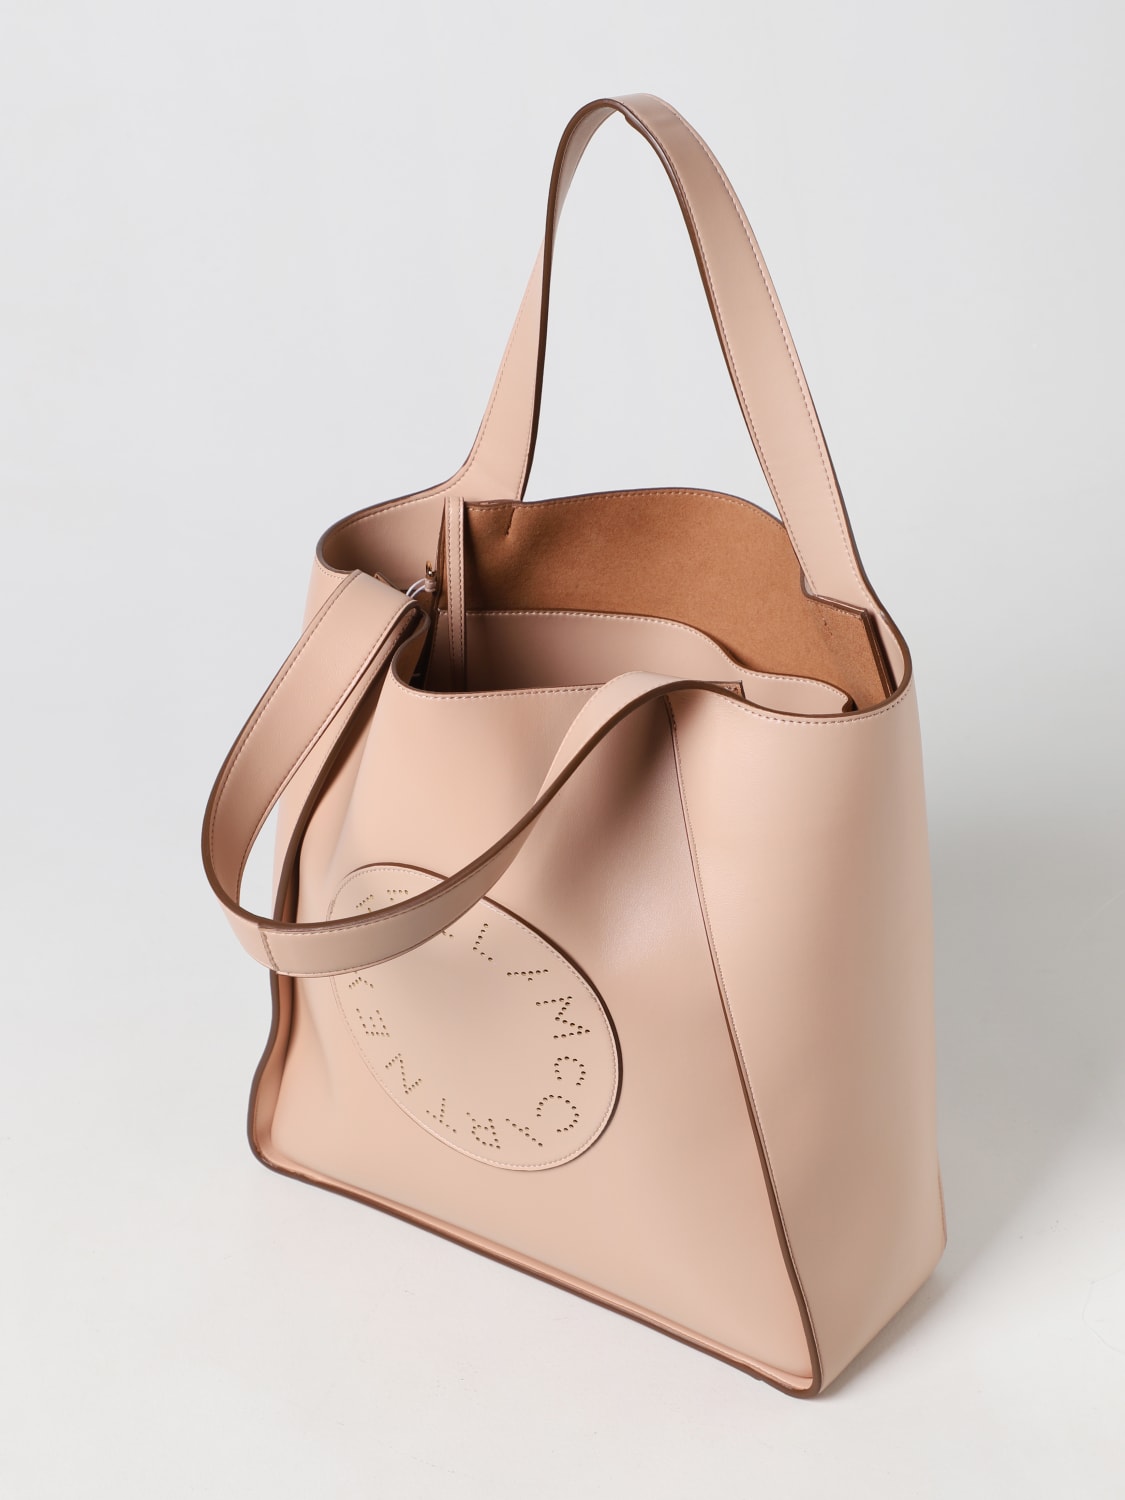 Stella McCartney Perforated Logo Tote Bag